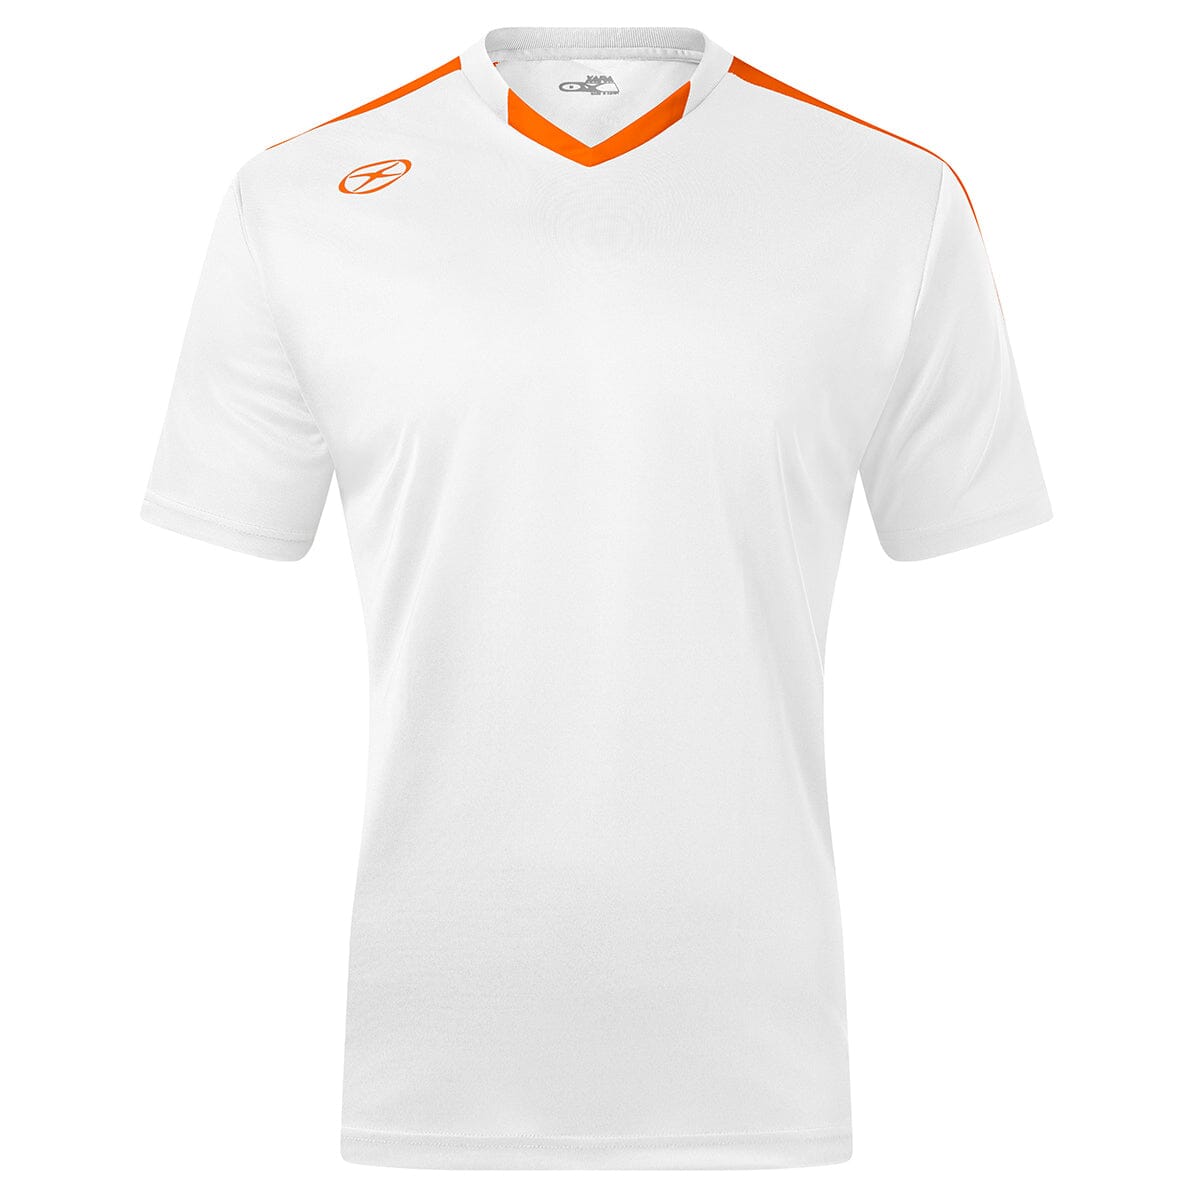 Britannia Jersey - Away Colors - Male Shirt Xara Soccer White/Orange Small 